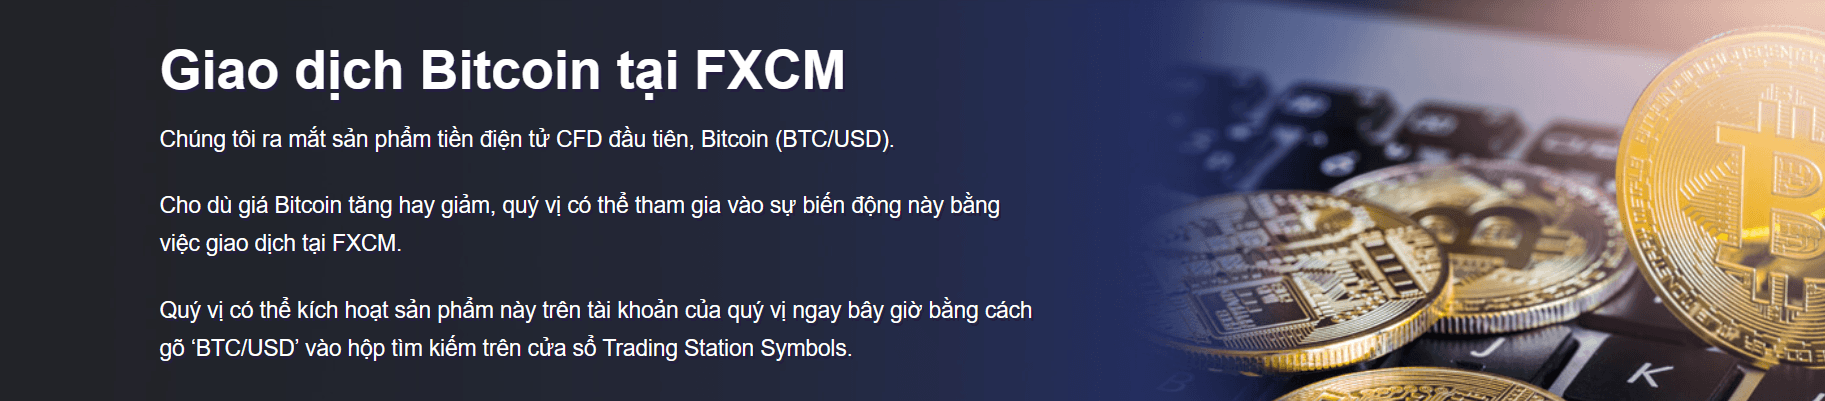 Các sản phẩm giao dịch sàn FXCM - Tiền ảo Crypto